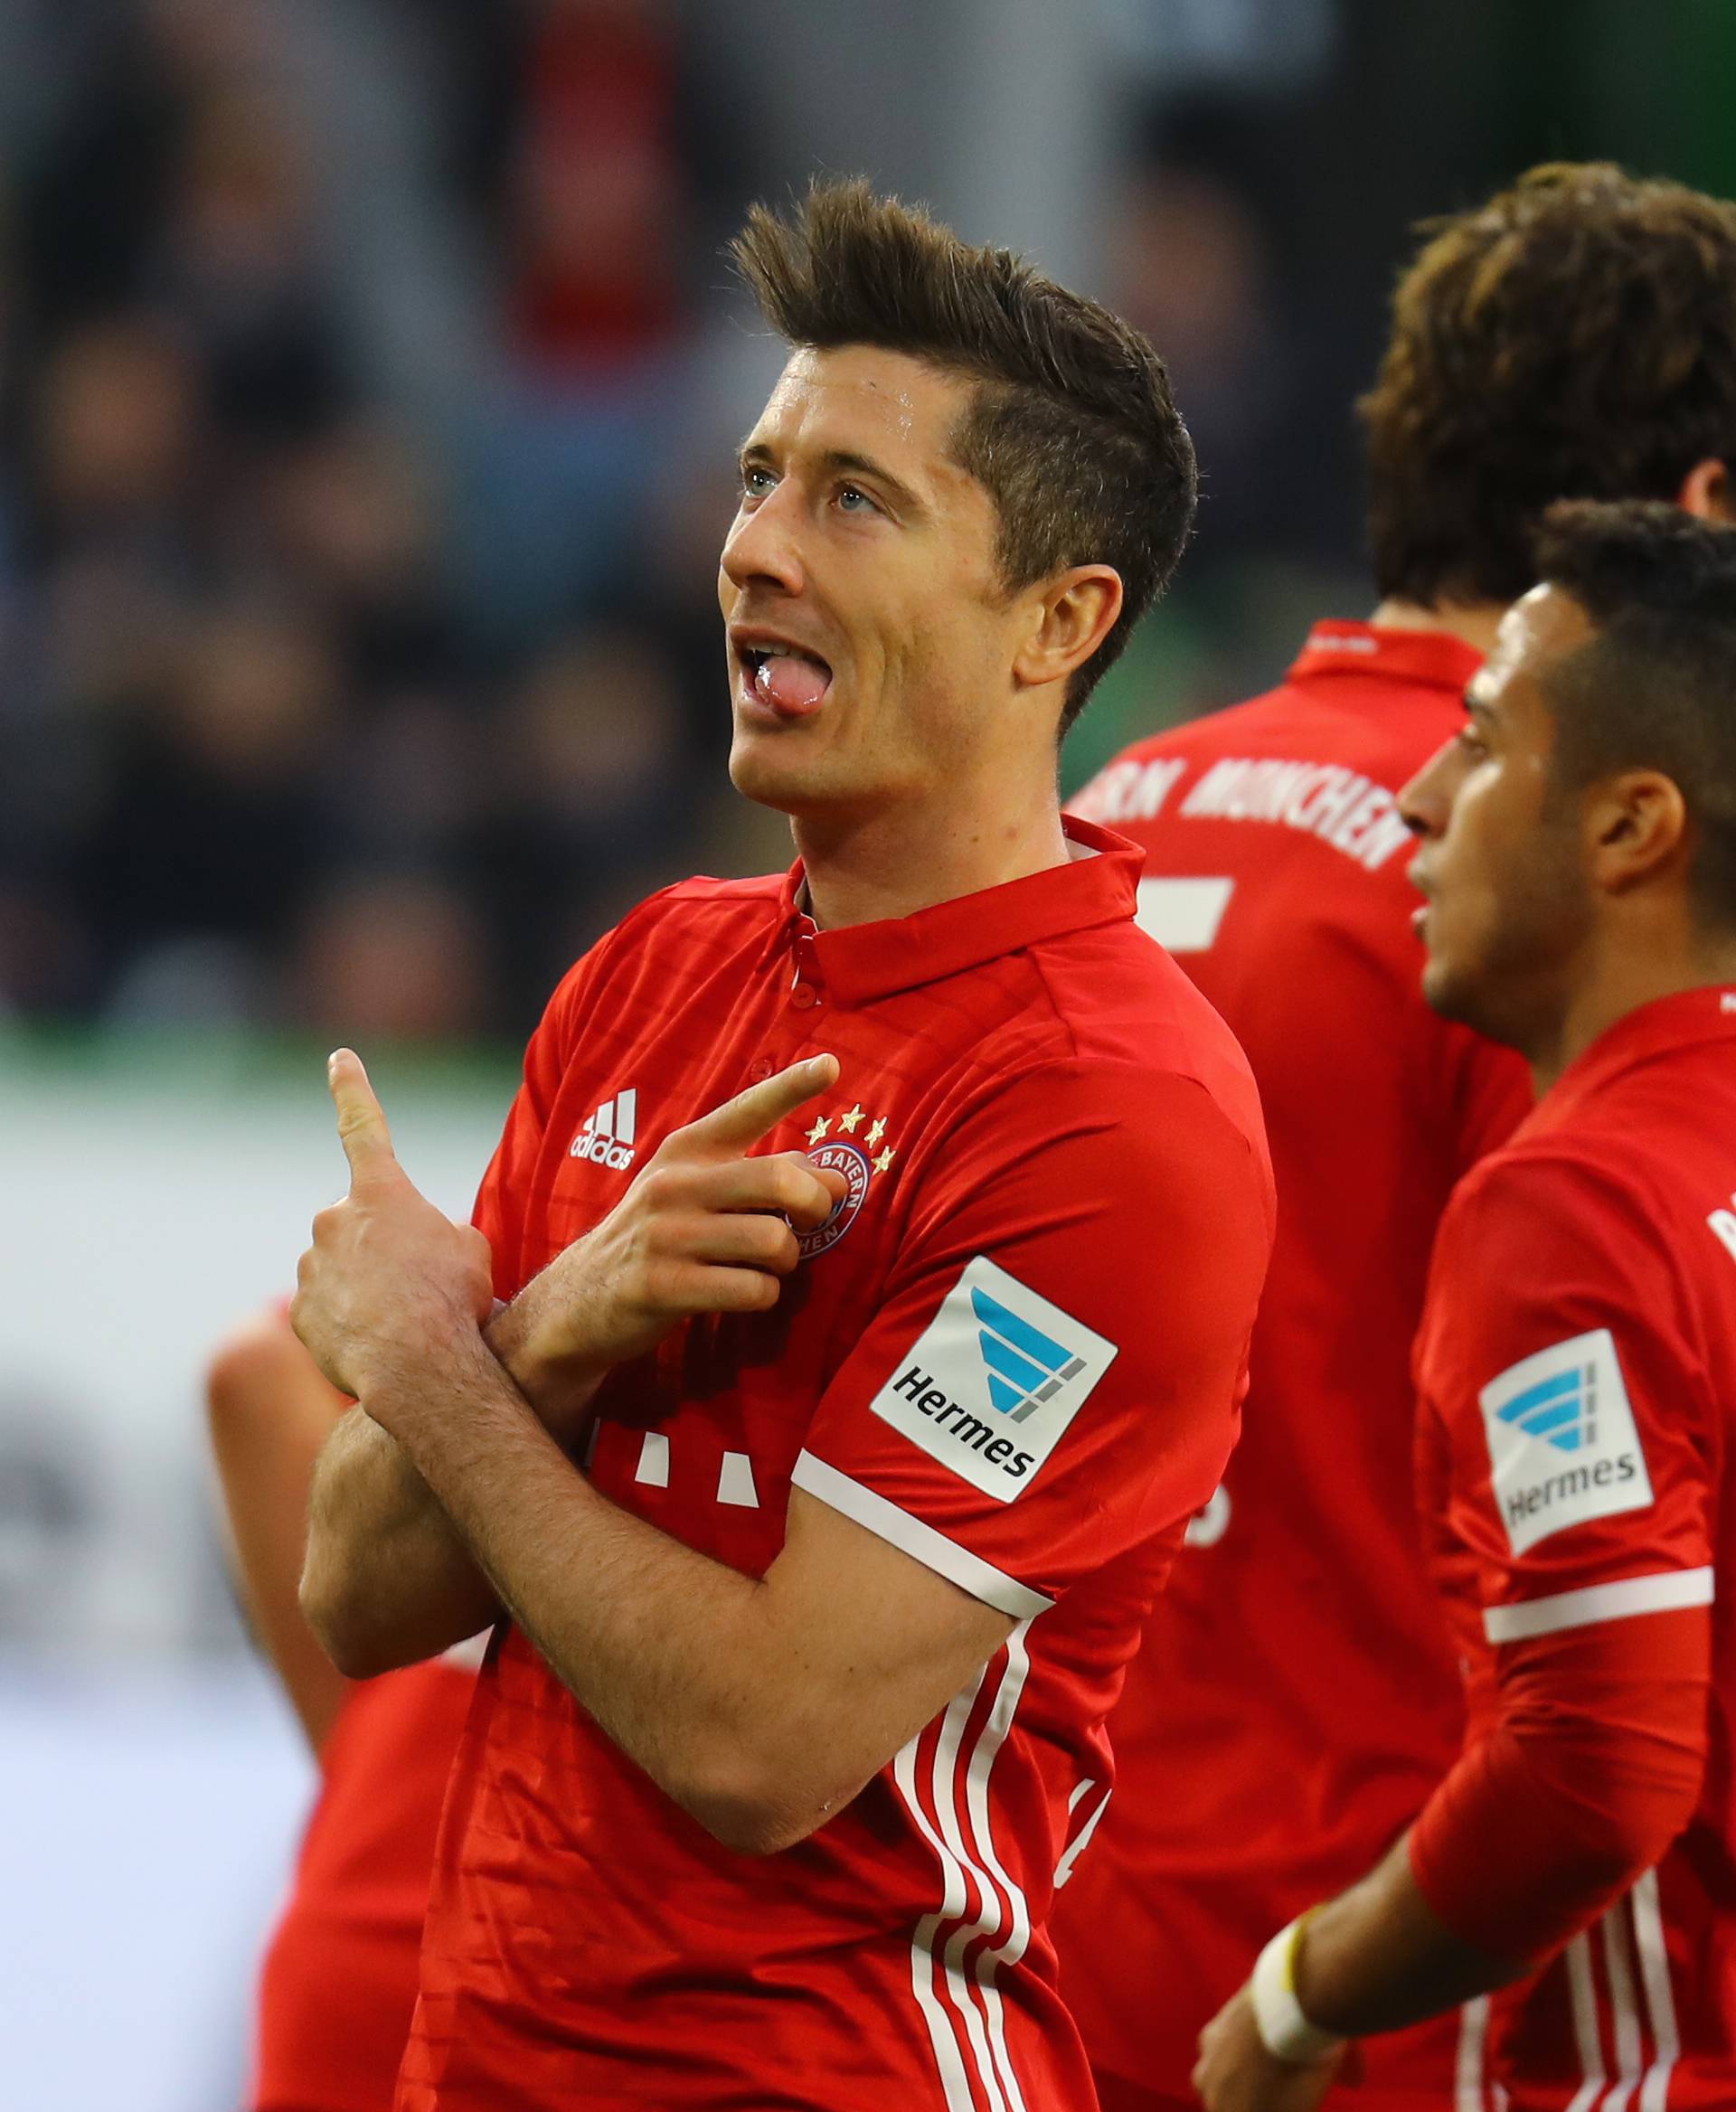 Bayern Munich's Robert Lewandowski celebrates scoring their third goal